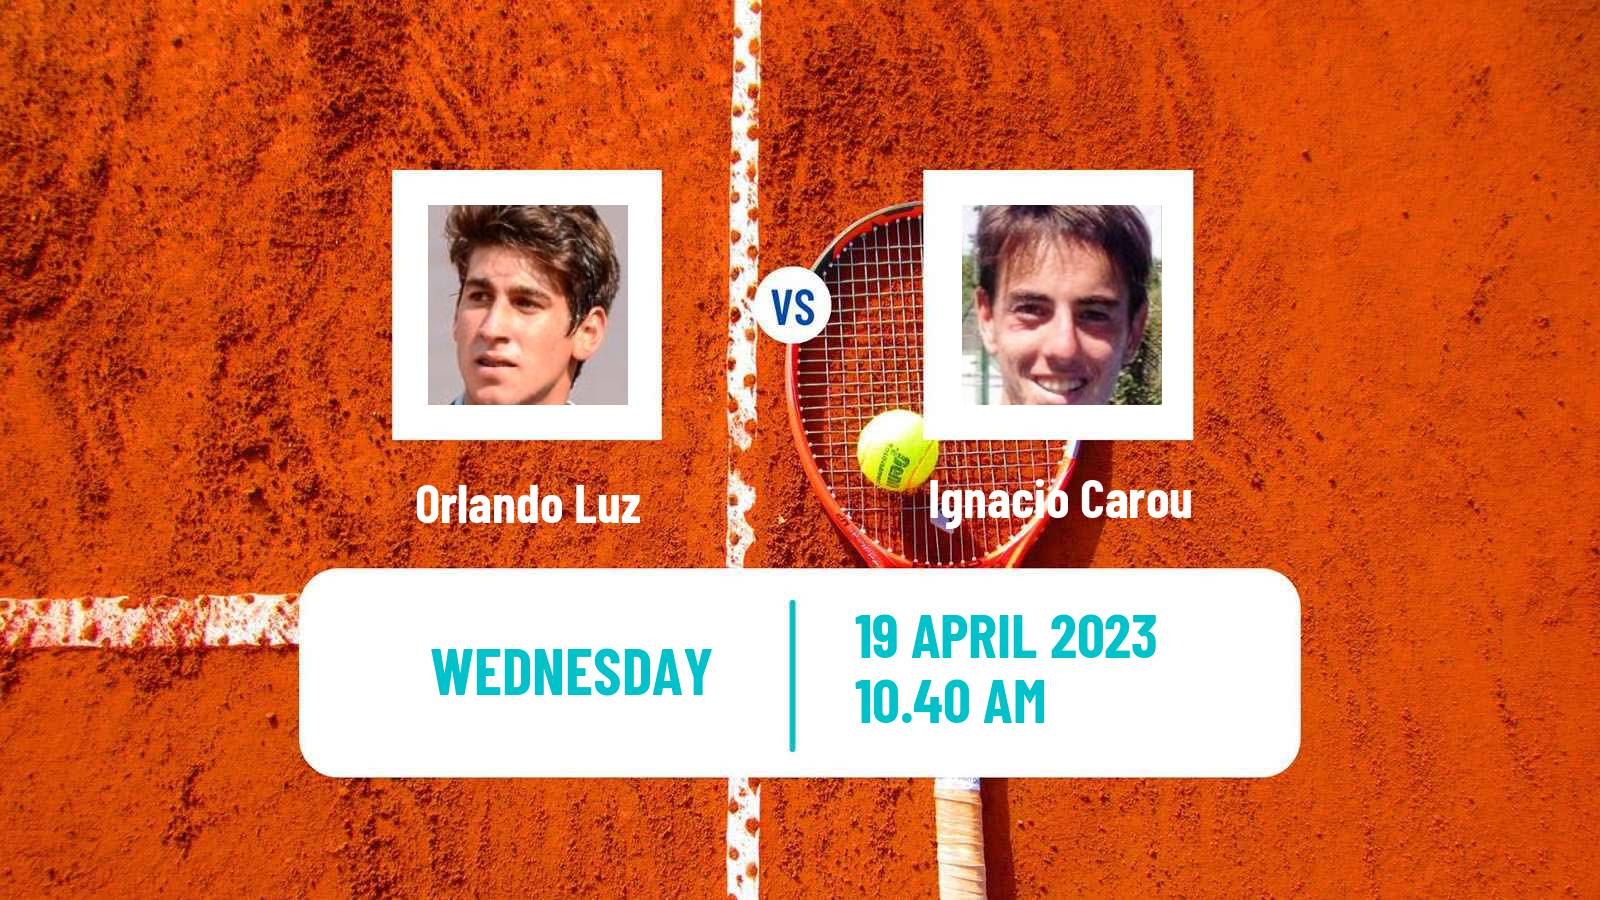 Tennis ATP Challenger Orlando Luz - Ignacio Carou